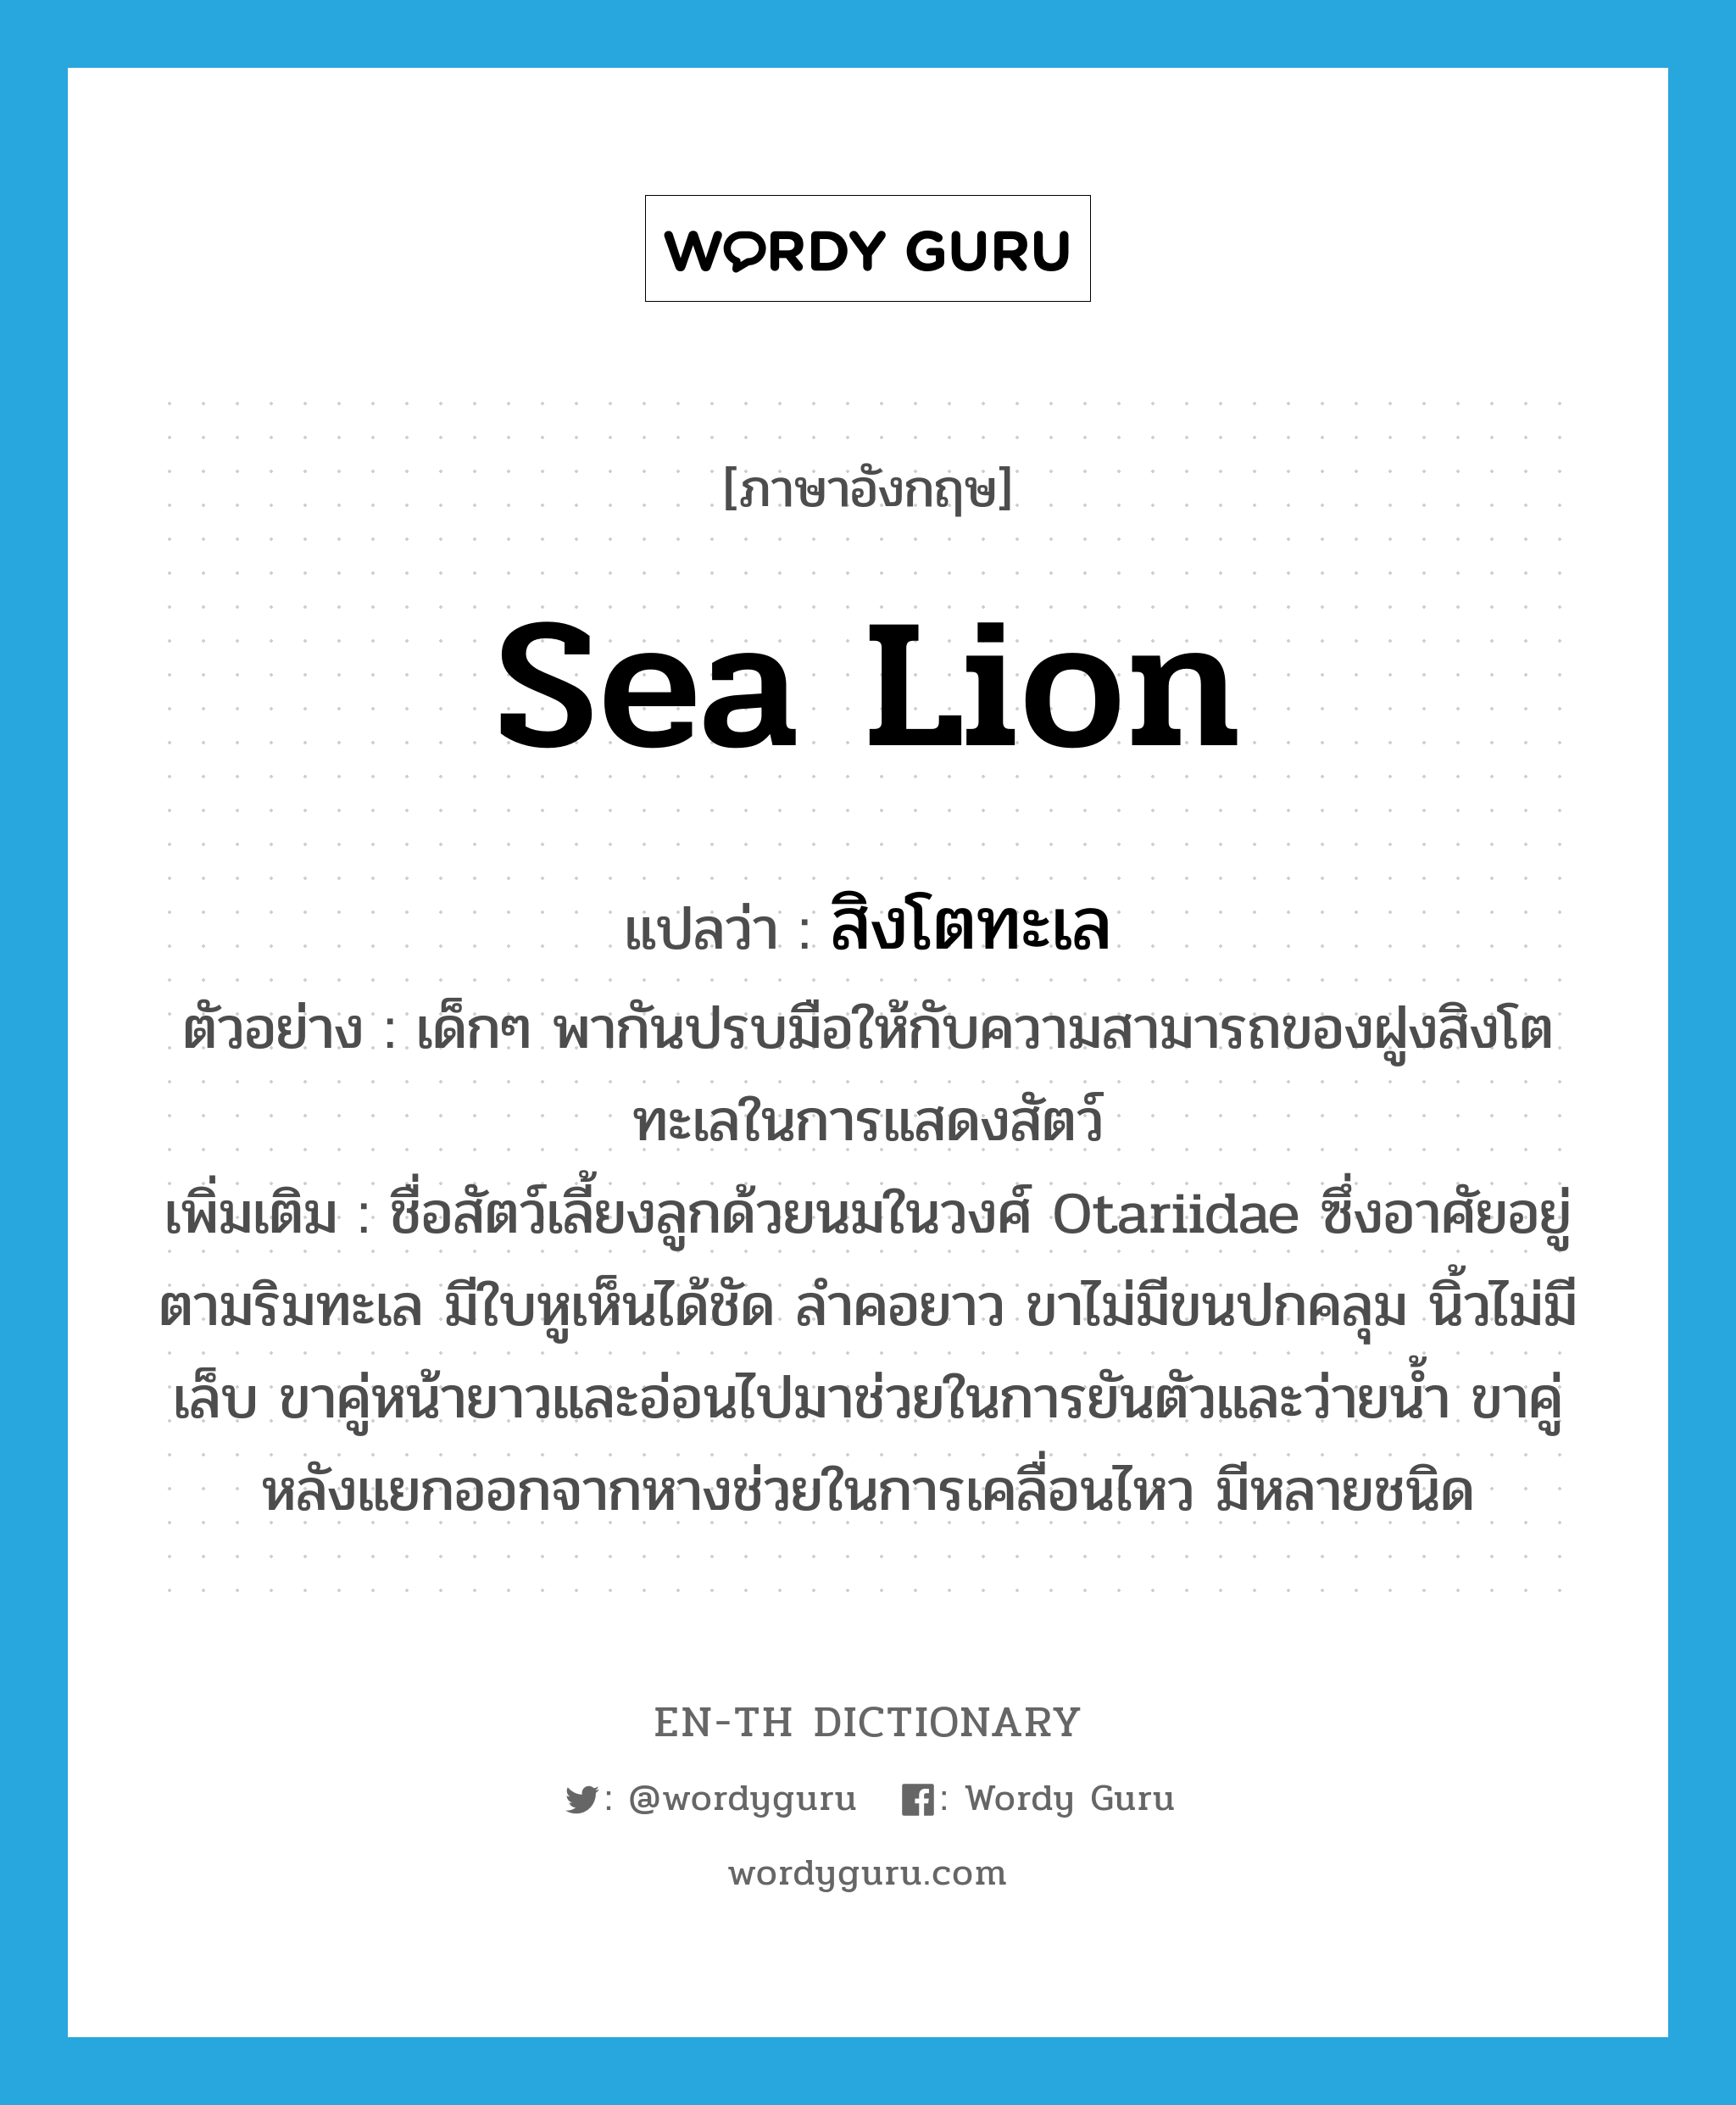 sea lion แปลว่า?, คำศัพท์ภาษาอังกฤษ sea lion แปลว่า สิงโตทะเล ประเภท N ตัวอย่าง เด็กๆ พากันปรบมือให้กับความสามารถของฝูงสิงโตทะเลในการแสดงสัตว์ เพิ่มเติม ชื่อสัตว์เลี้ยงลูกด้วยนมในวงศ์ Otariidae ซึ่งอาศัยอยู่ตามริมทะเล มีใบหูเห็นได้ชัด ลำคอยาว ขาไม่มีขนปกคลุม นิ้วไม่มีเล็บ ขาคู่หน้ายาวและอ่อนไปมาช่วยในการยันตัวและว่ายน้ำ ขาคู่หลังแยกออกจากหางช่วยในการเคลื่อนไหว มีหลายชนิด หมวด N